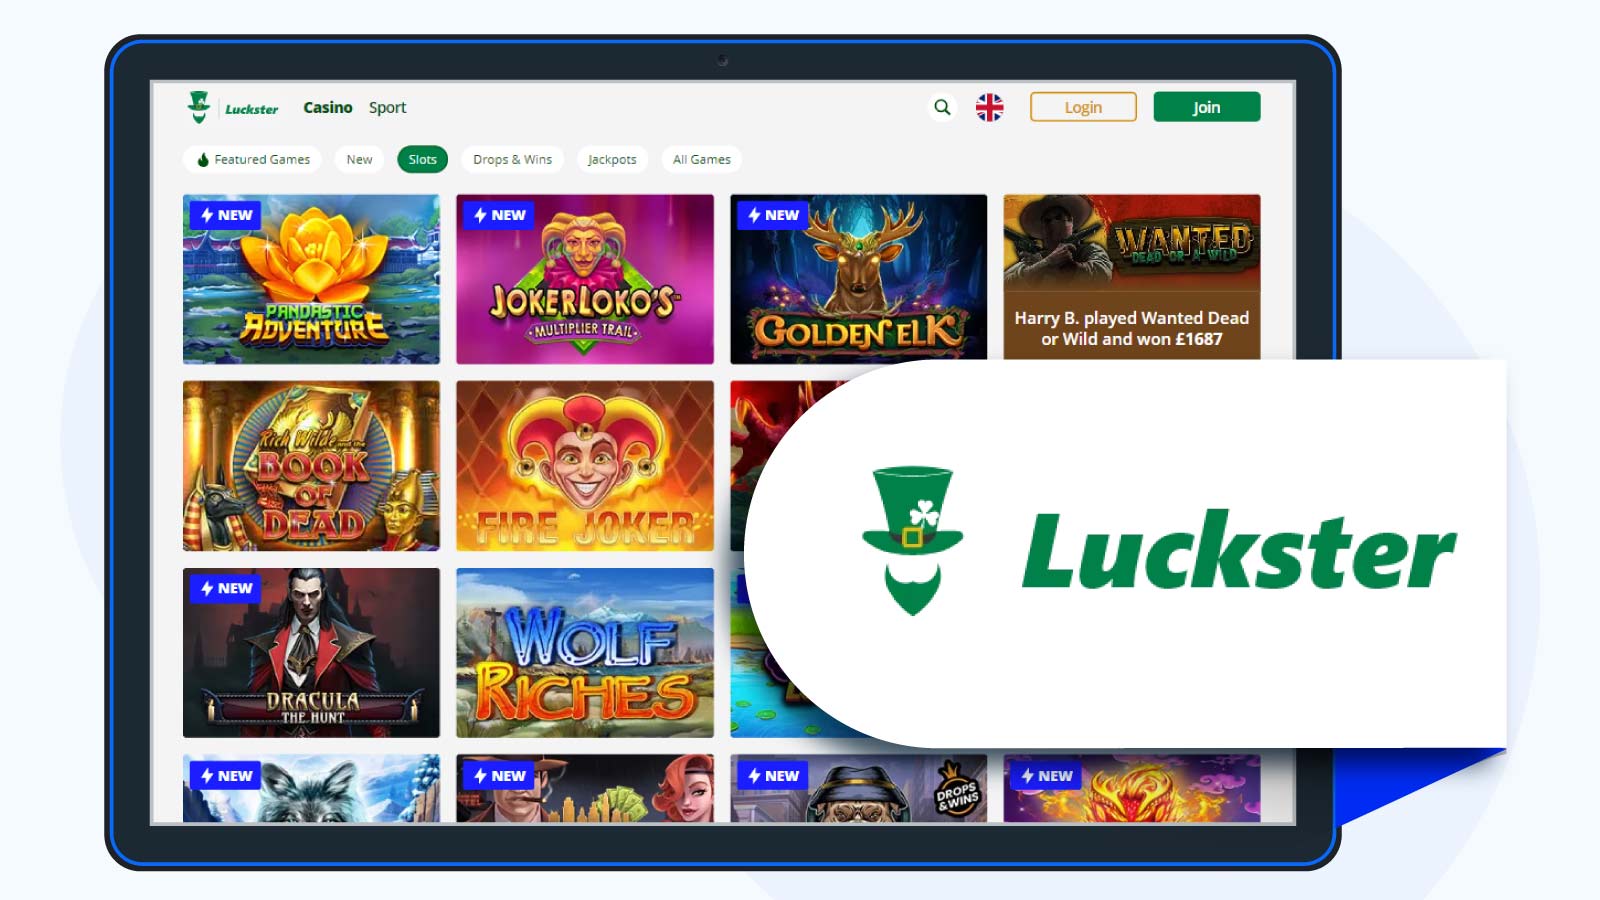 Luckster-Casino-Valuable-UK-Bonuses-For-Maximizing-Profit